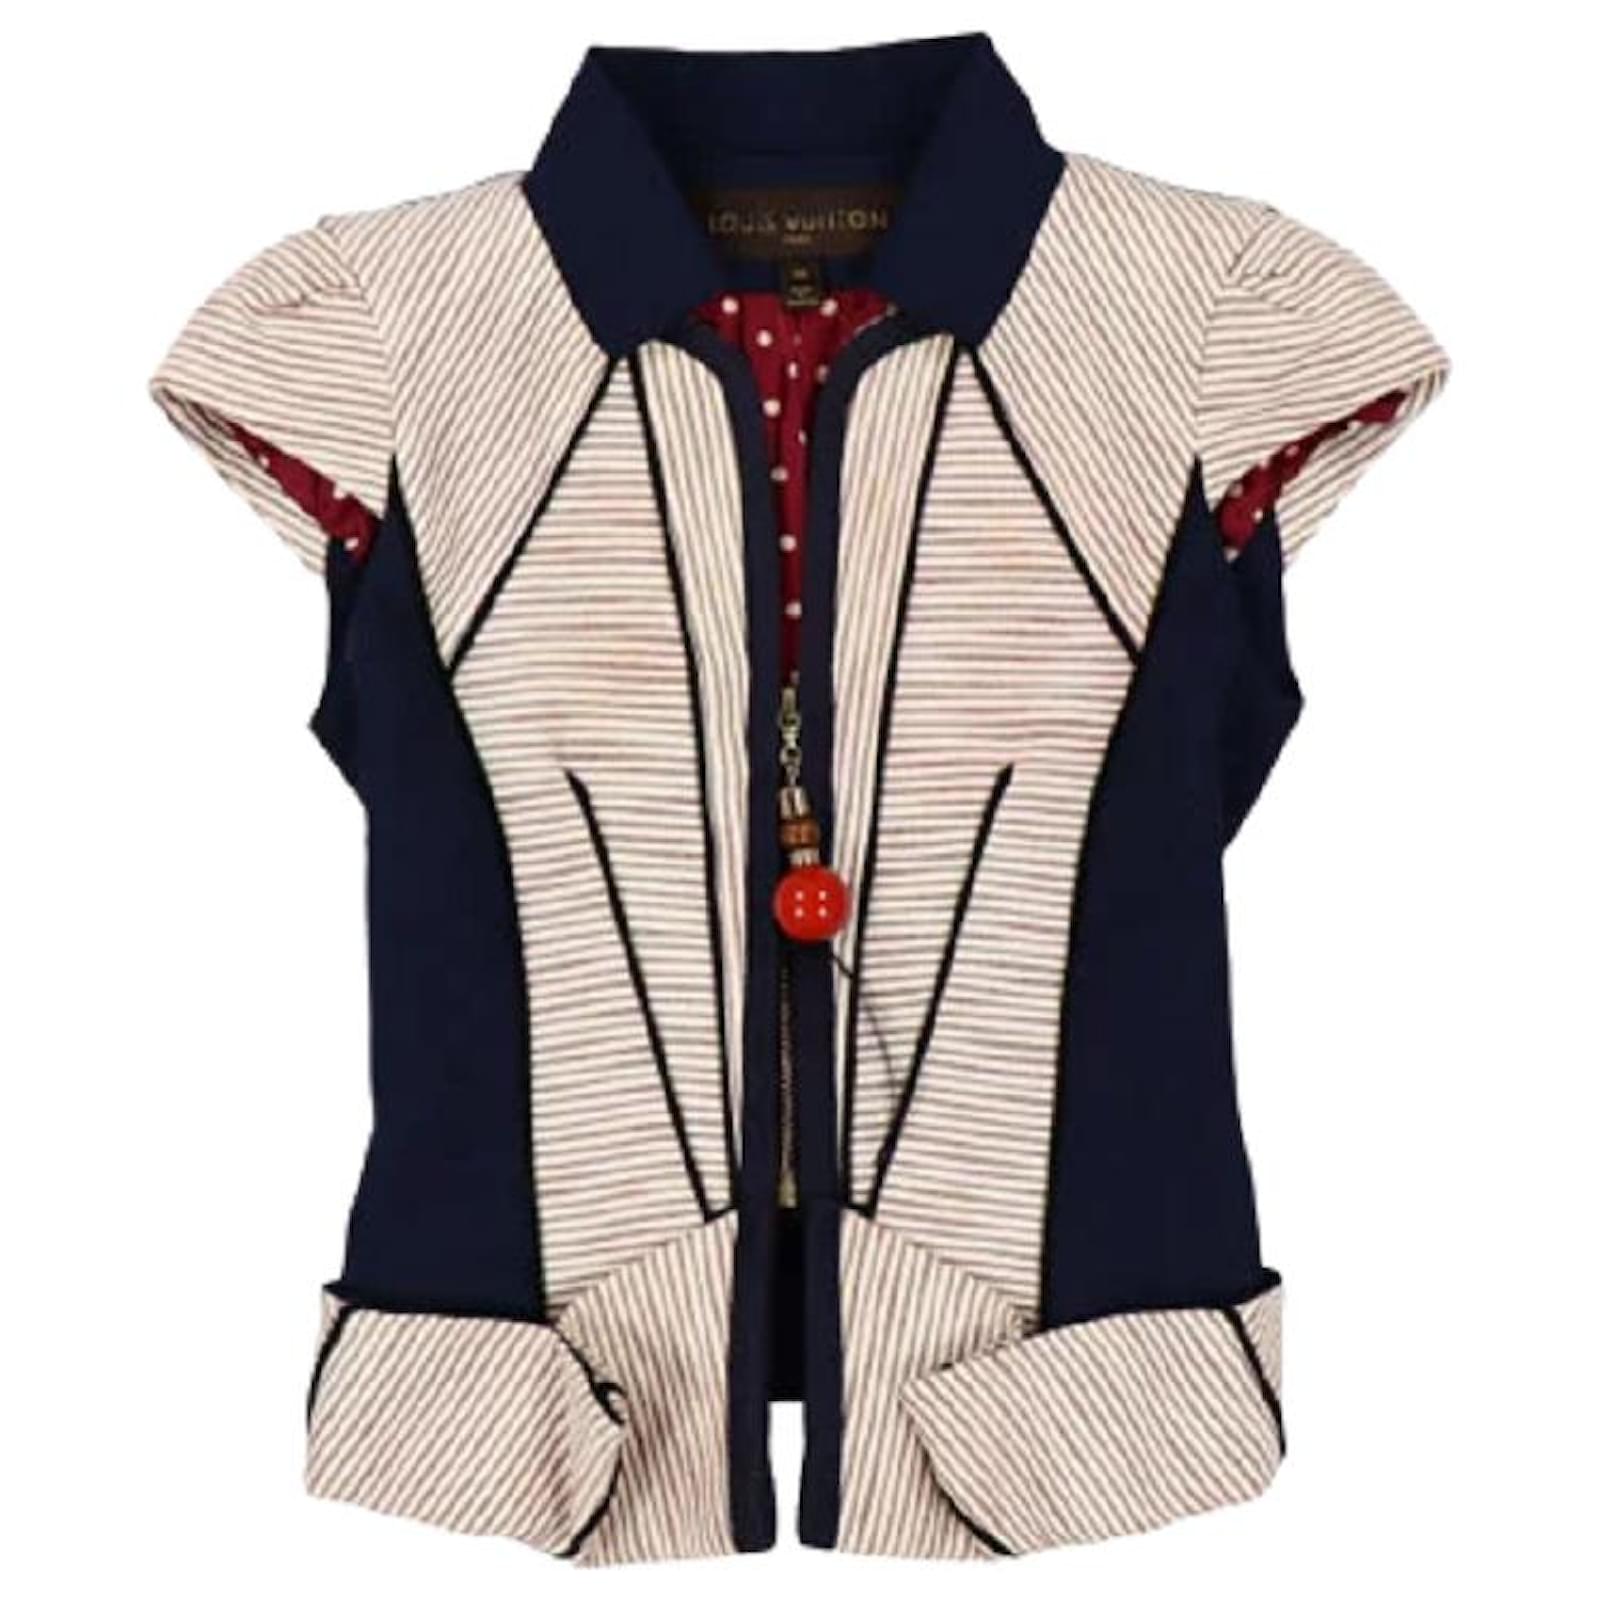 Louis Vuitton / LOUIS VUITTON jacket short sleeves striped pattern